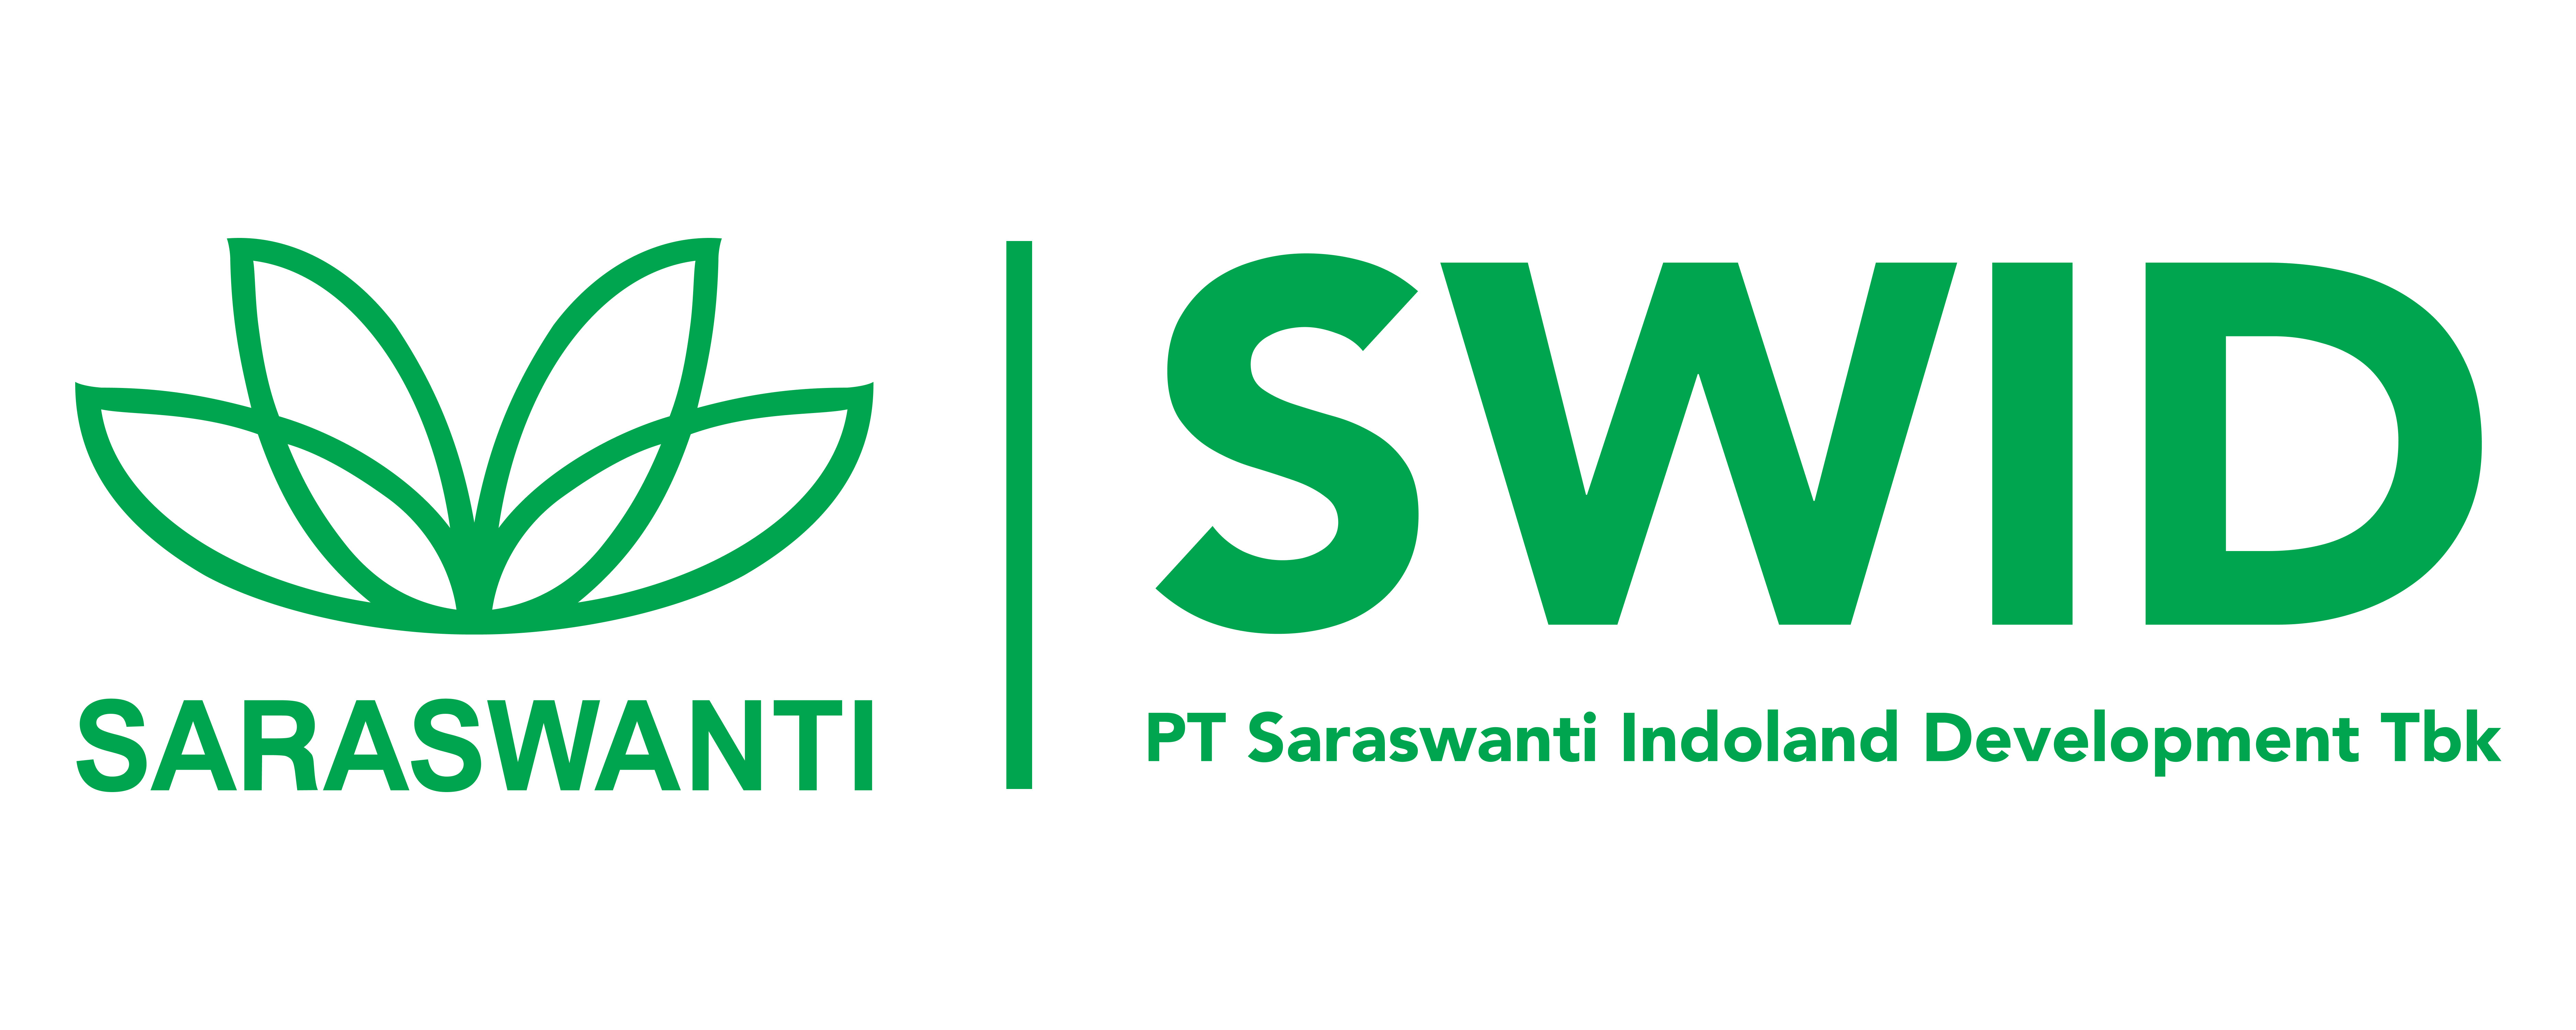 Logo PT SARASWANTI INDOLAND DEVELOPMENT